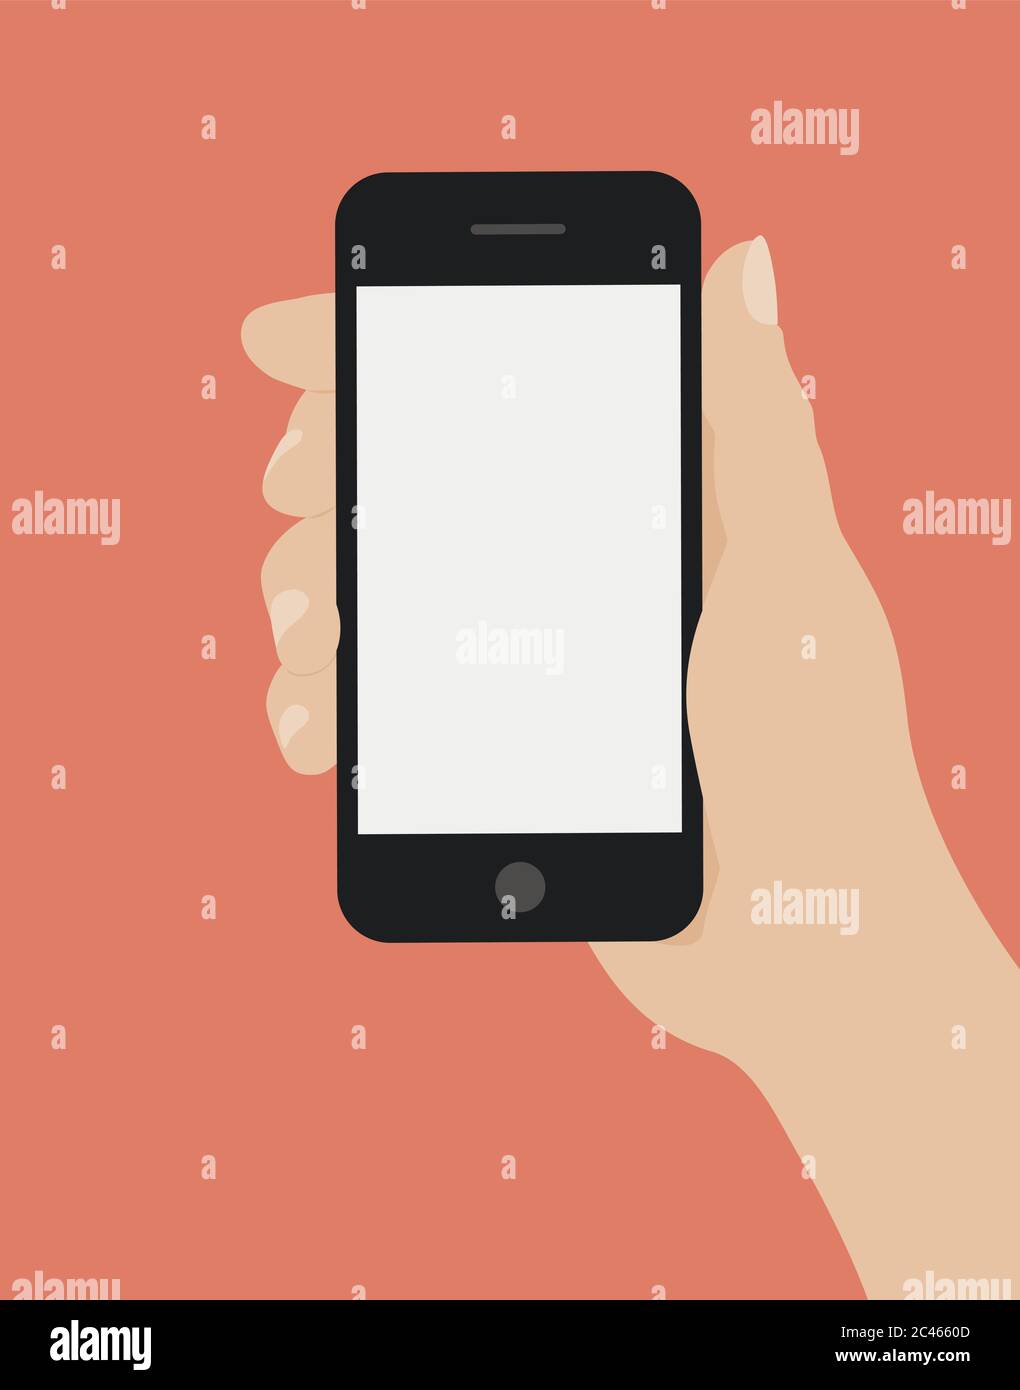 Hand holding smart phone on red background. Flat design vector illustration Stock Vector